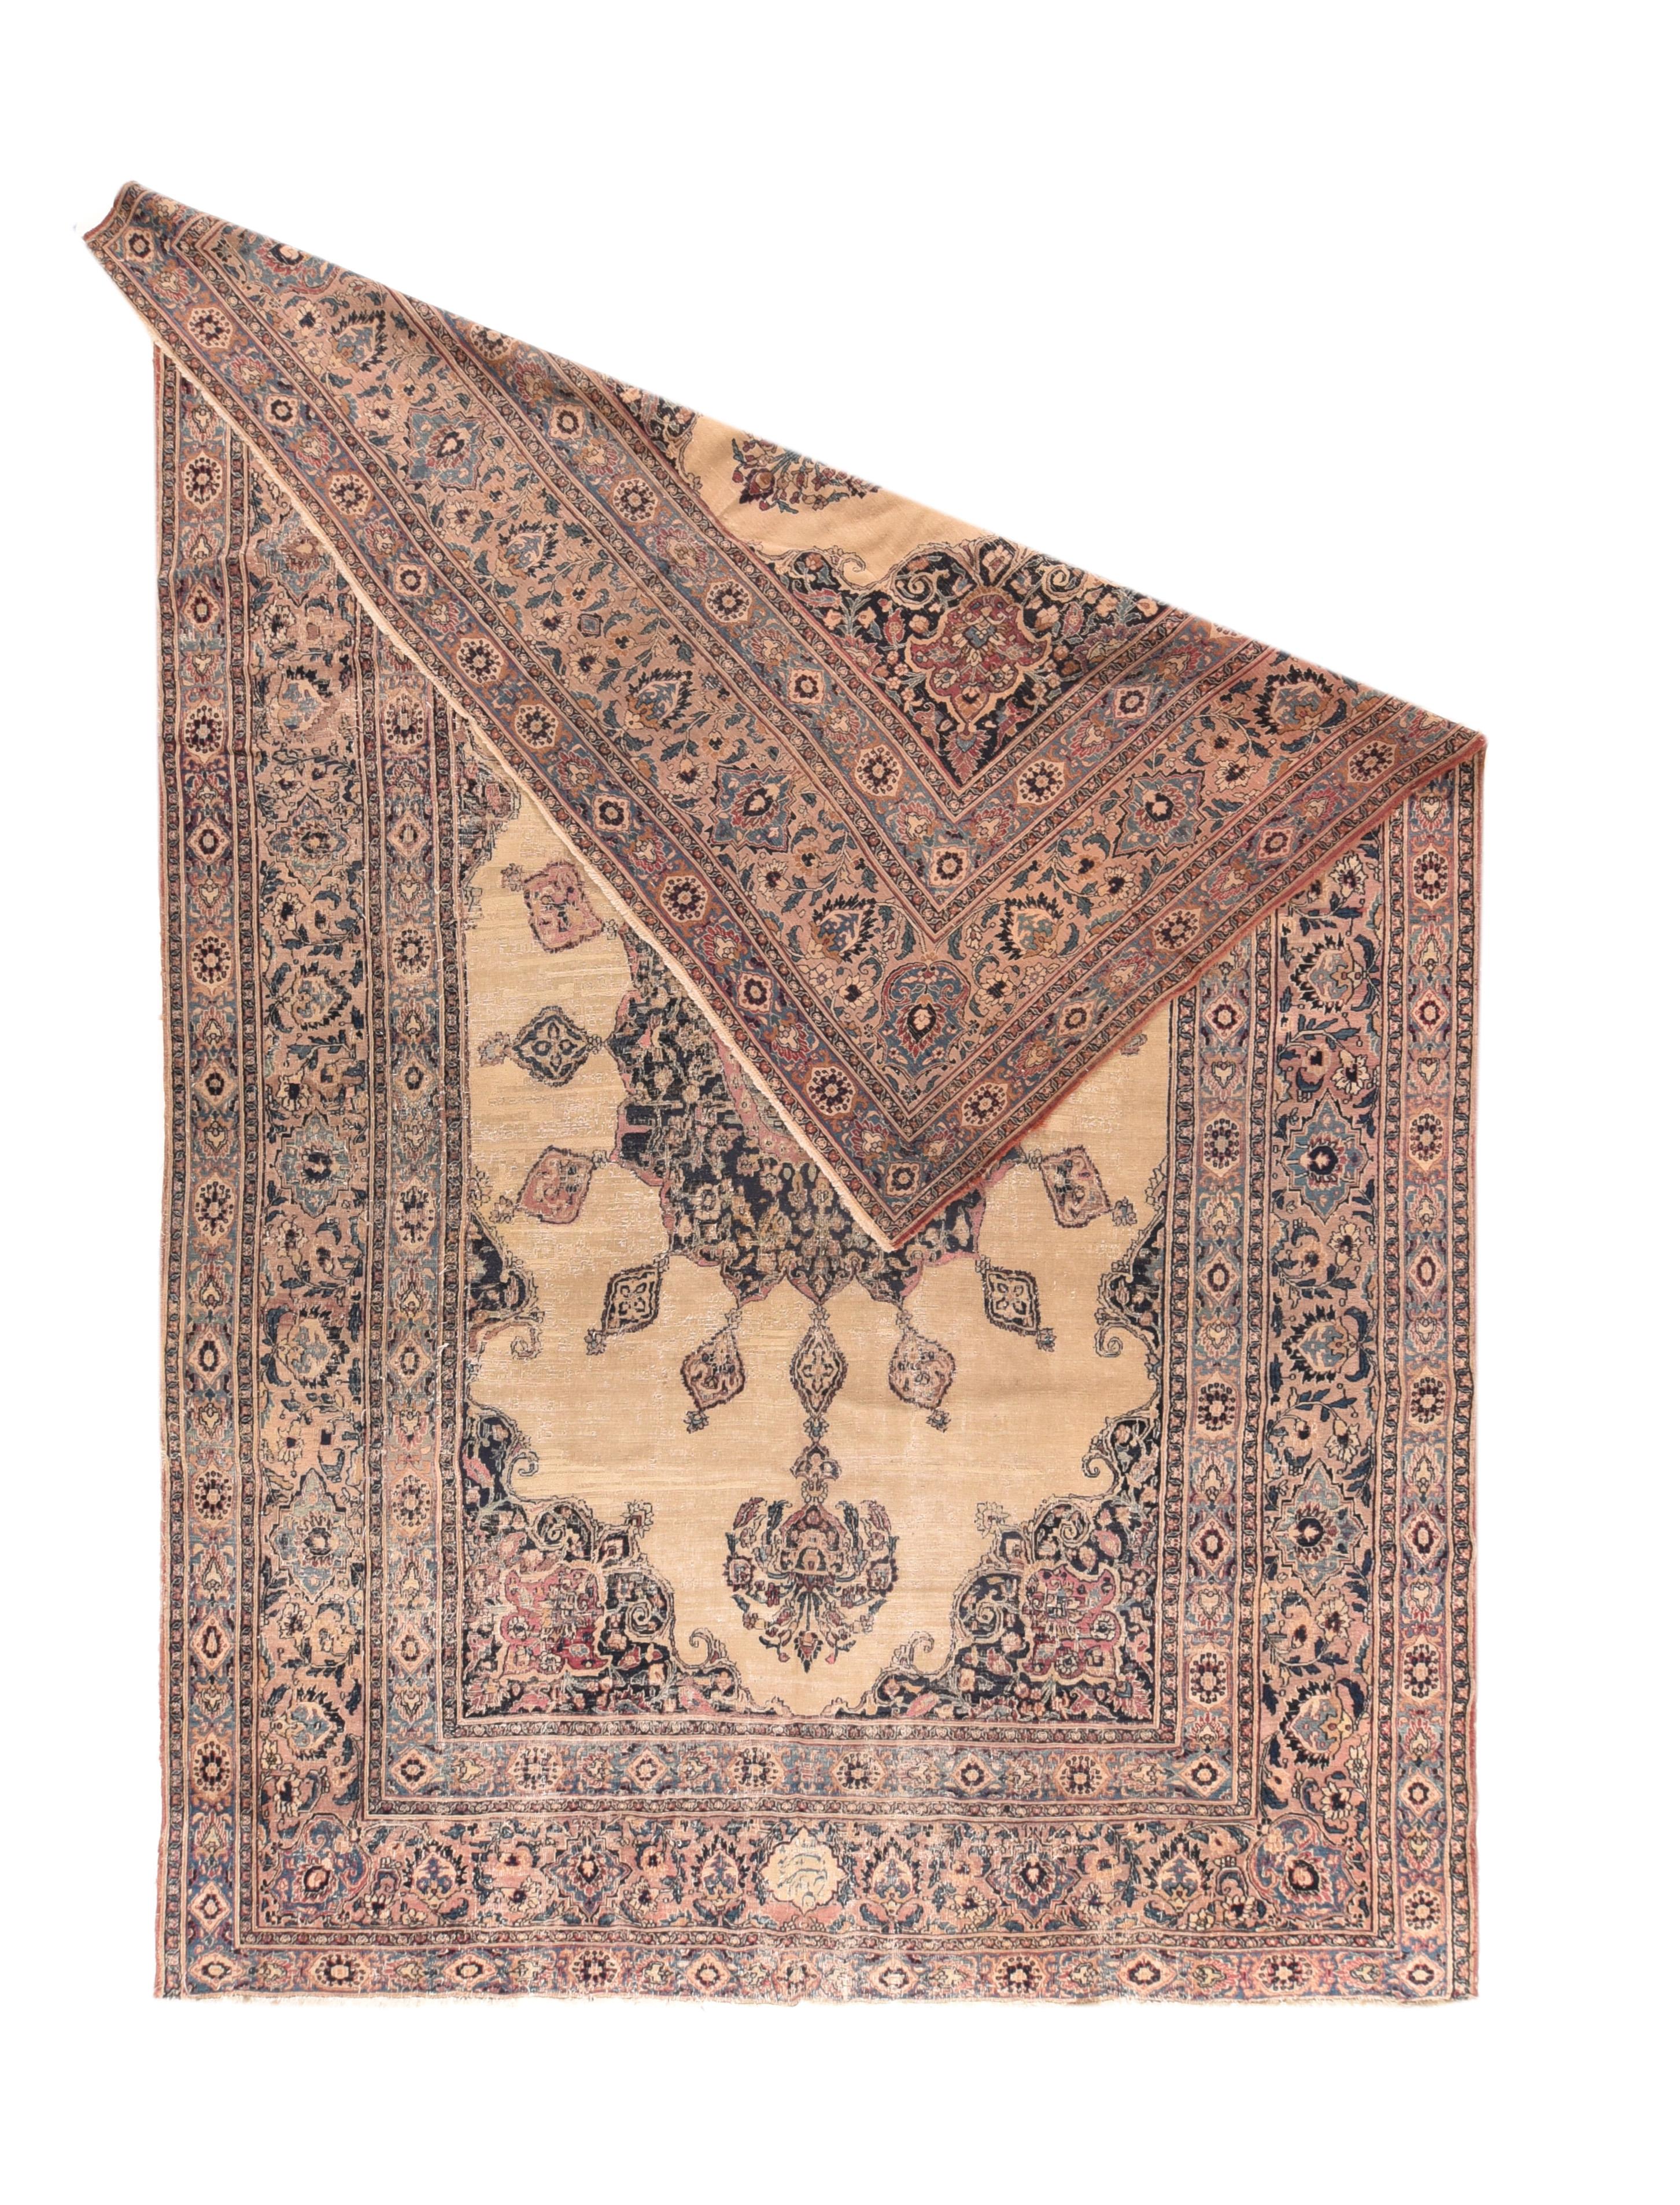 Antique Khorasan rug measures 9'9'' x 14'10''.